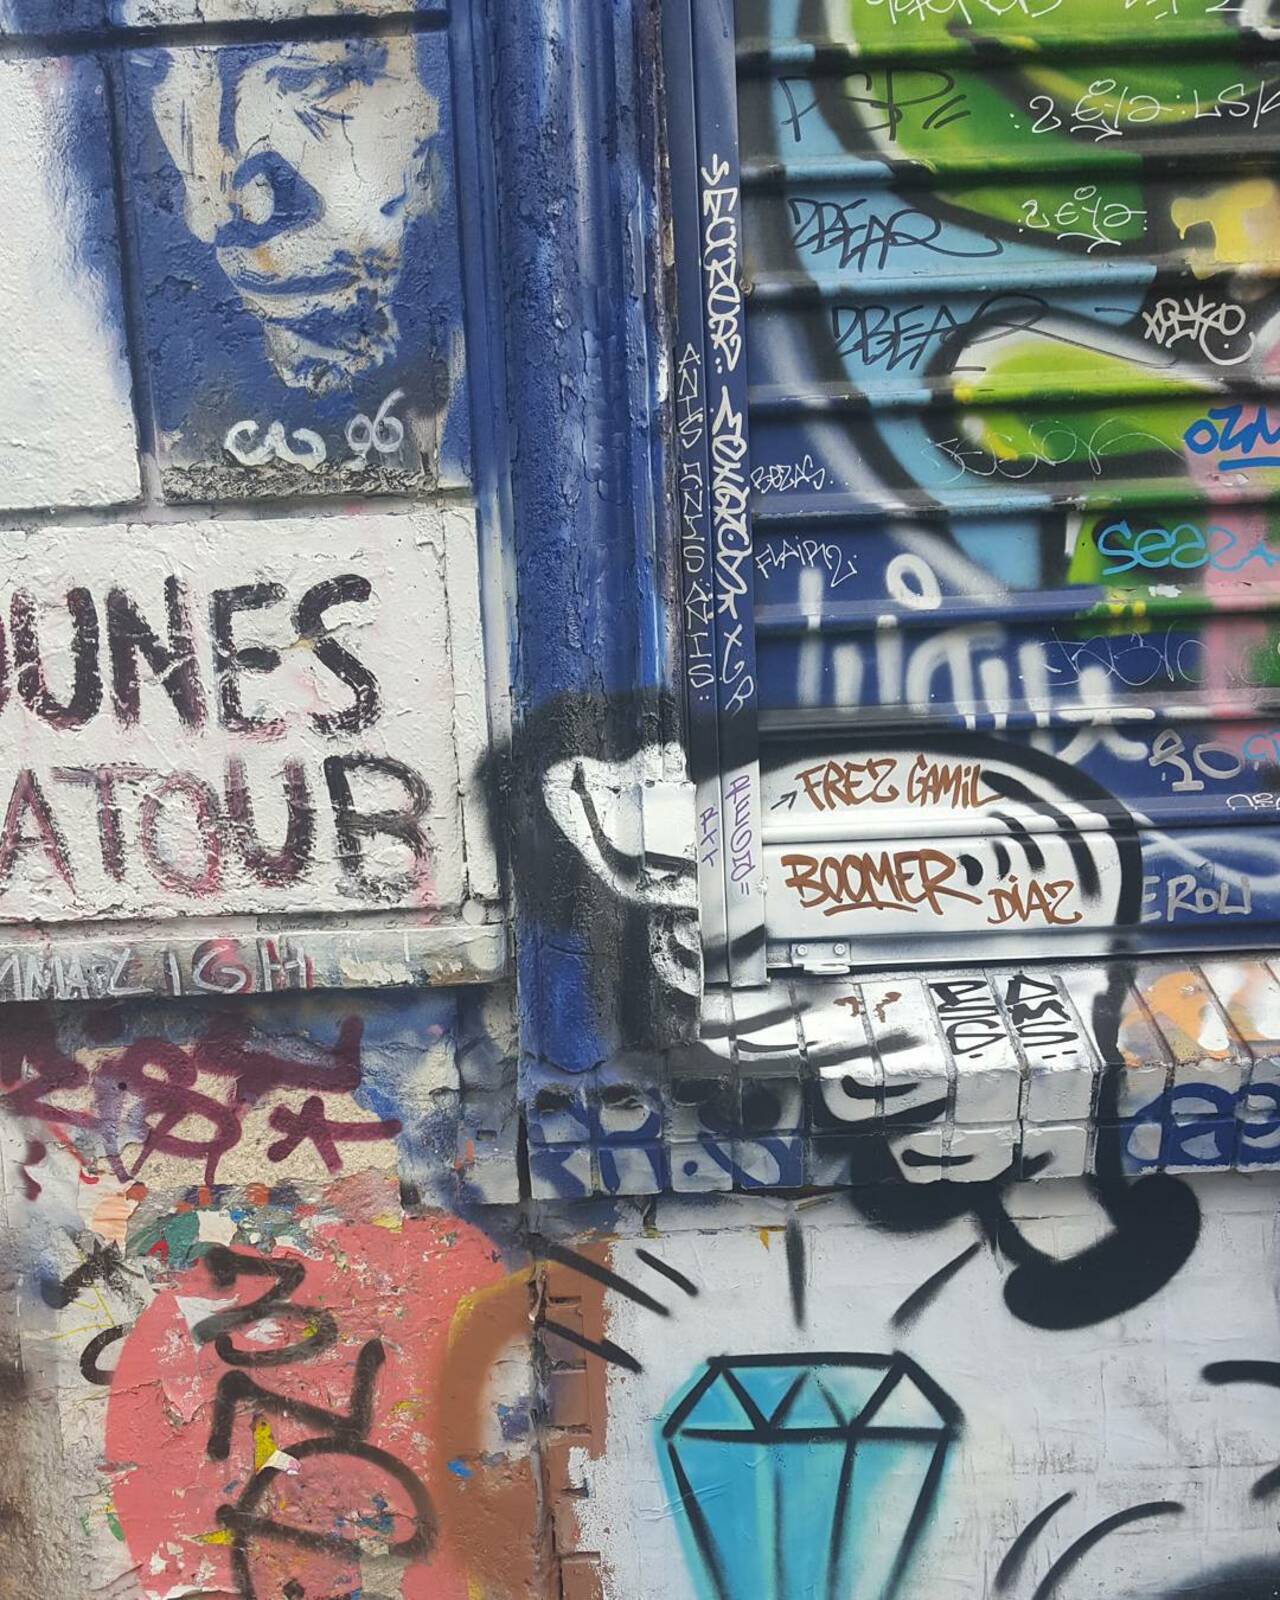 #Paris #graffiti photo by @jdewey67 http://ift.tt/1VhLuNM #StreetArt http://t.co/1uwa6512mS